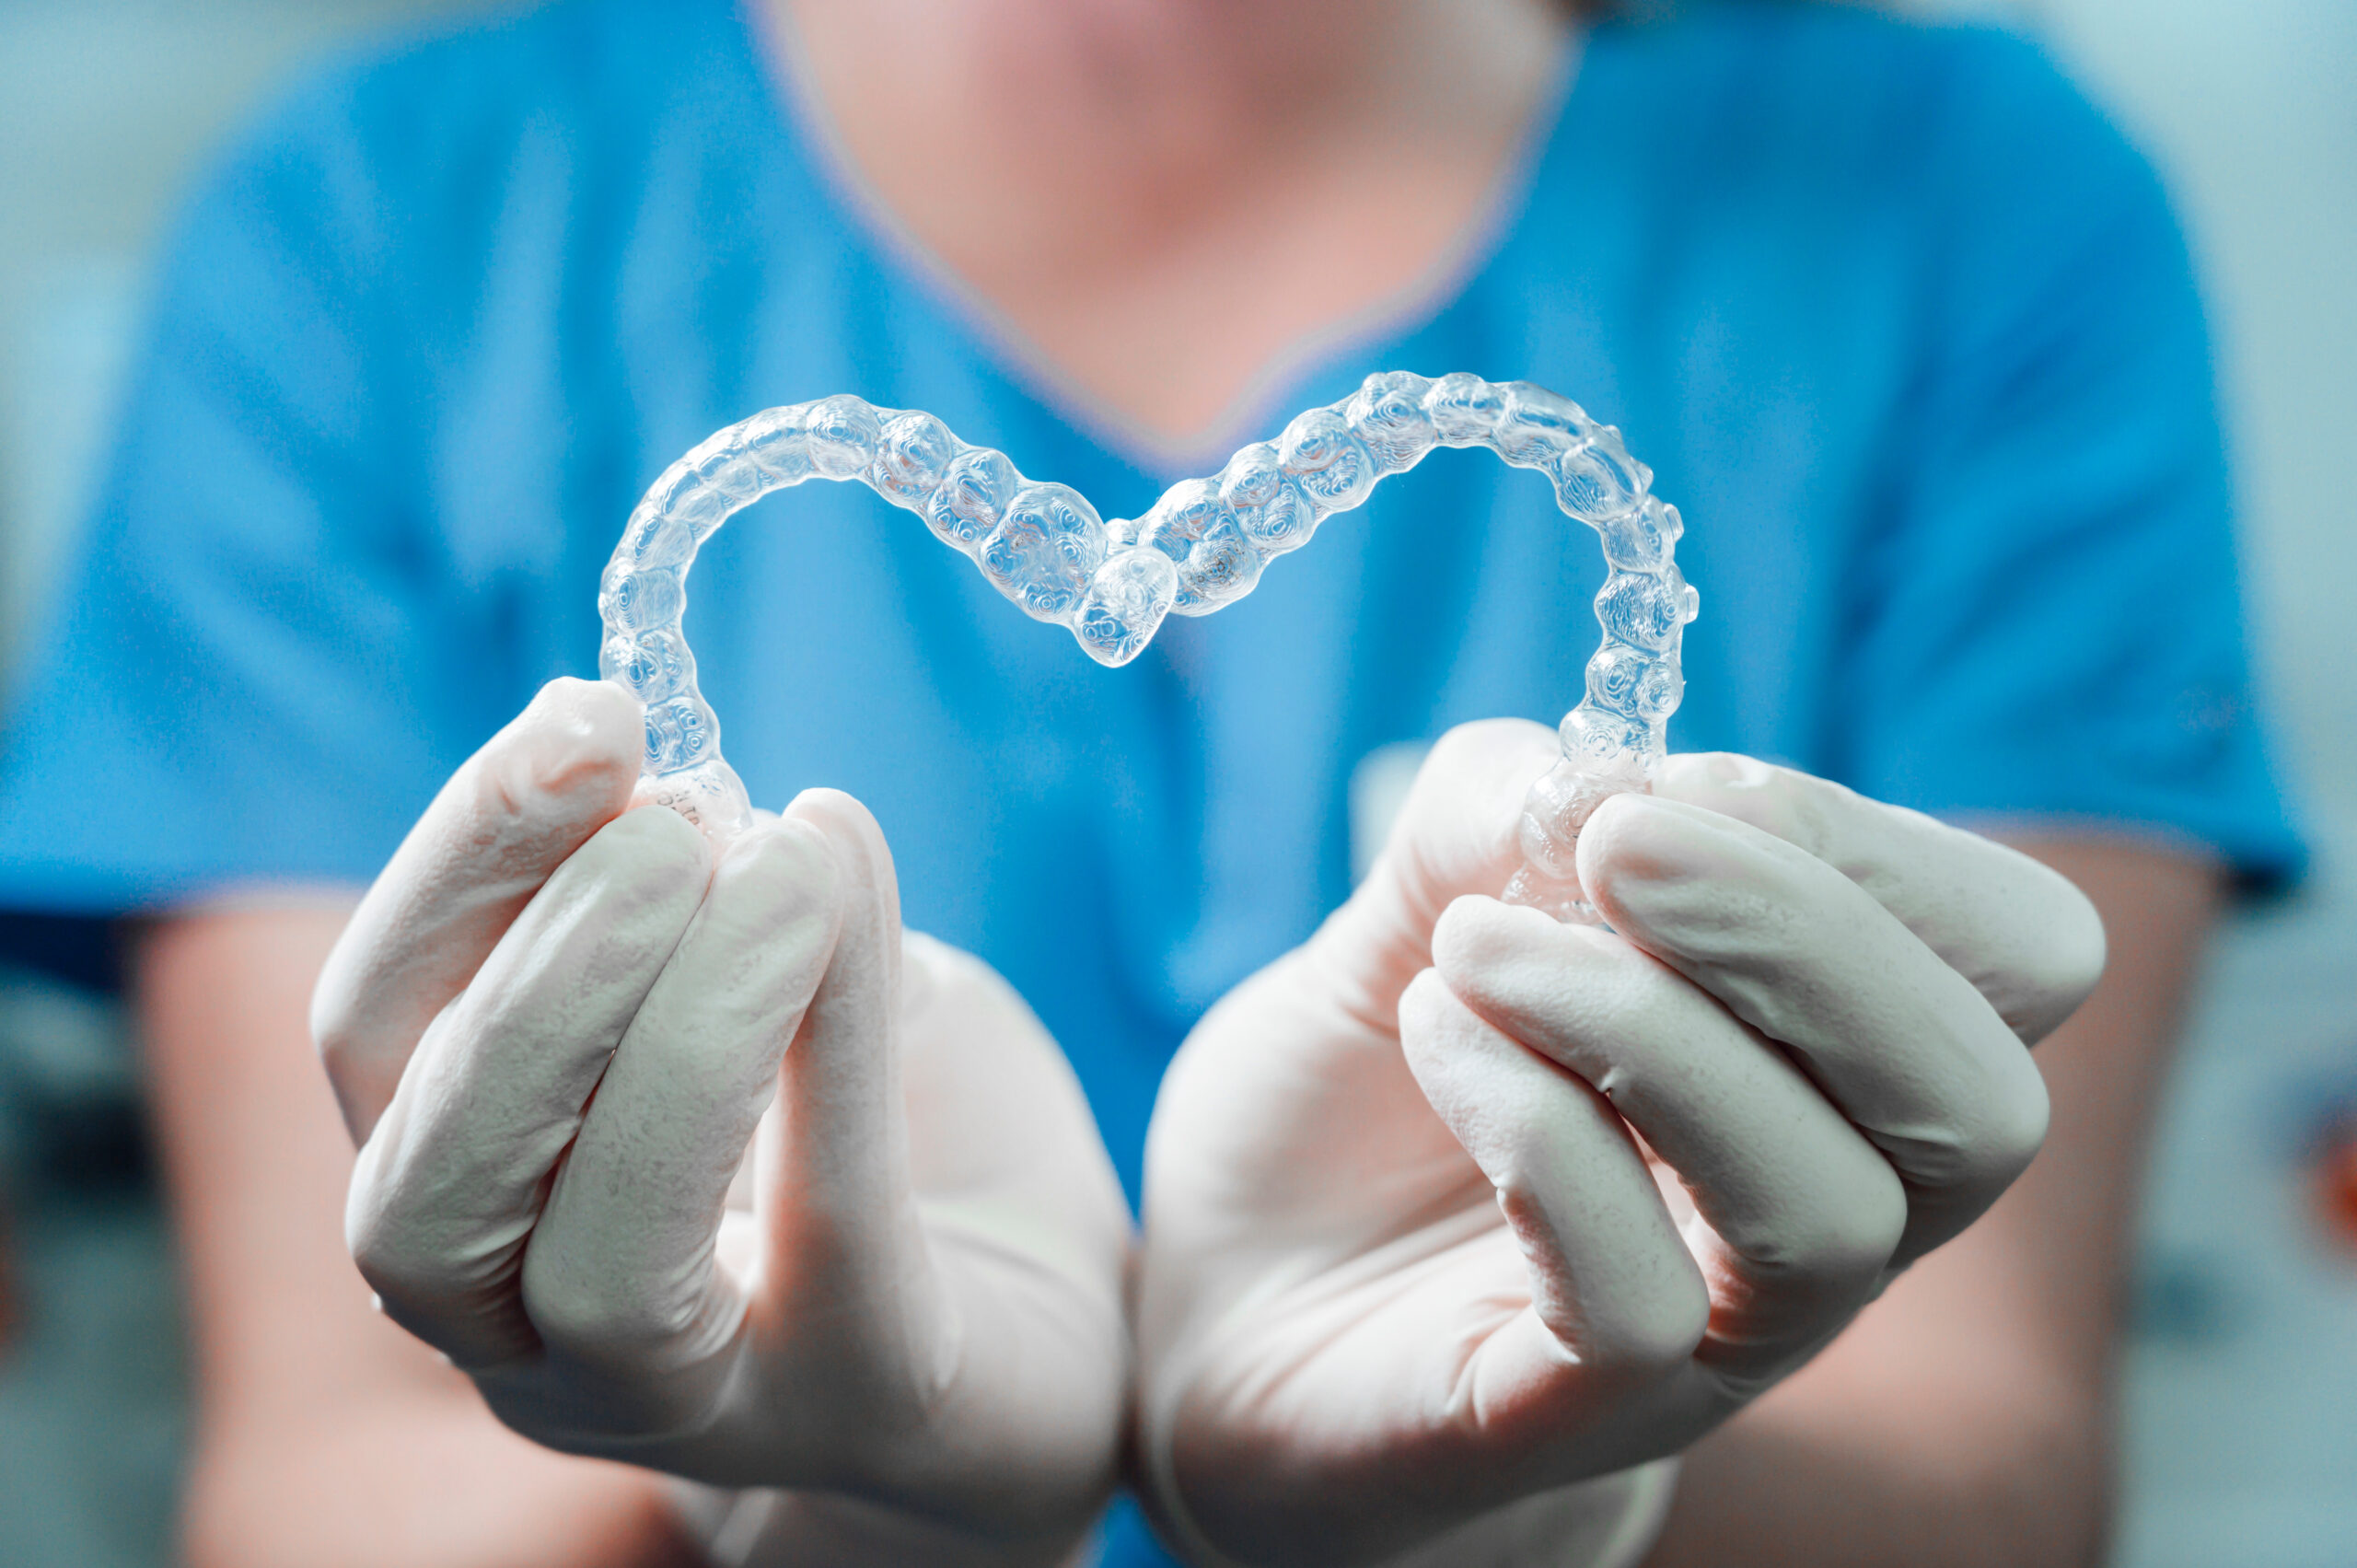 modern orthodontics solution : clear aligners 